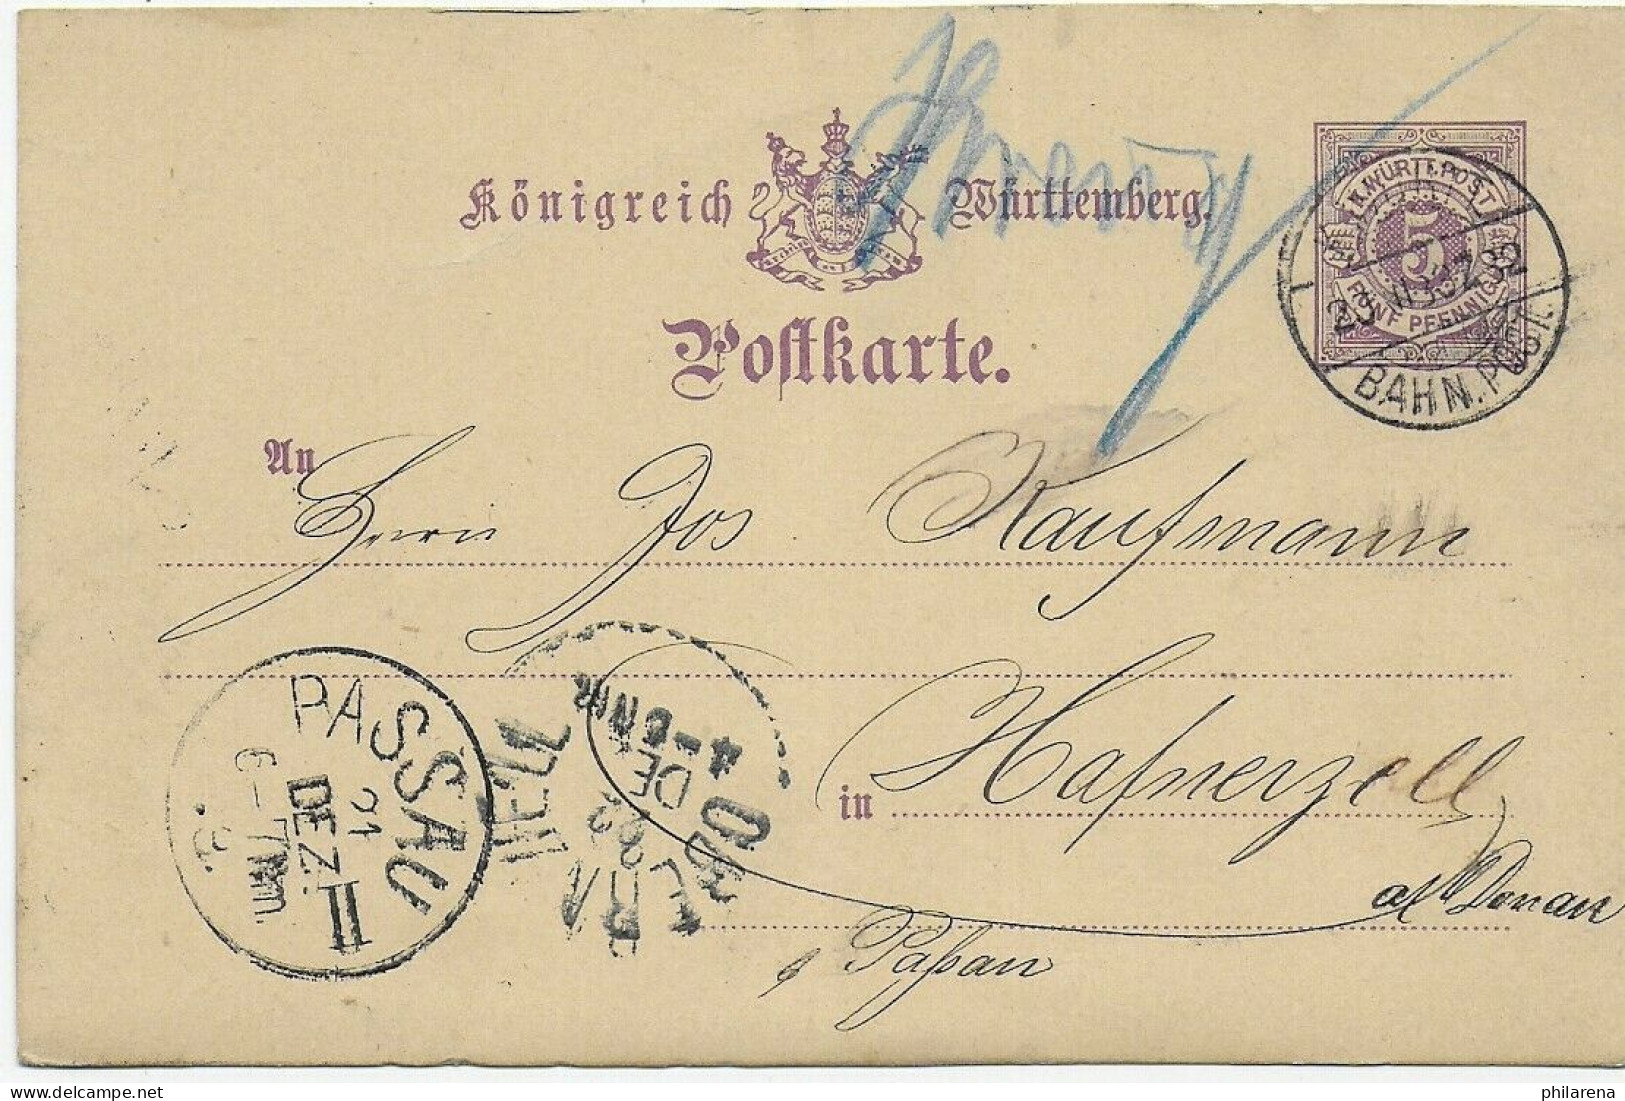 Ganzsache Schwenningen Nach Hafnerzell/Oberzell 1883 - Lettres & Documents